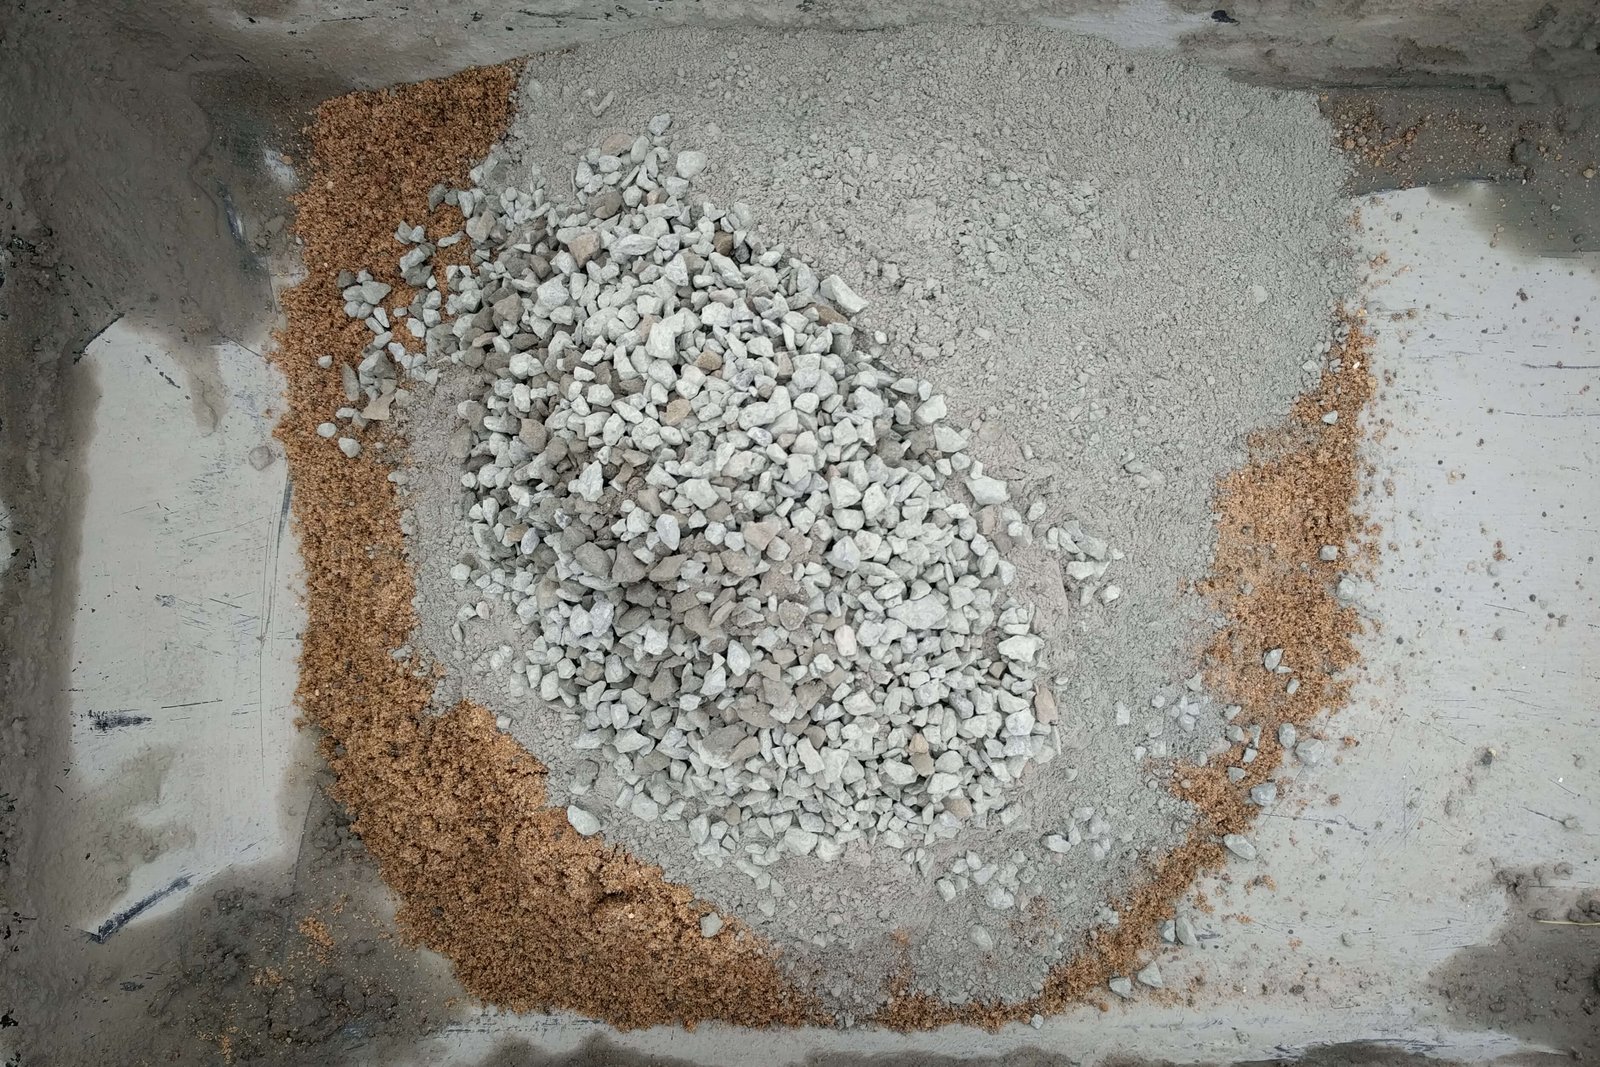 Glacial elsker sand, black volcanic basalt/dresser trap rock, portland cement in a black mixing tray